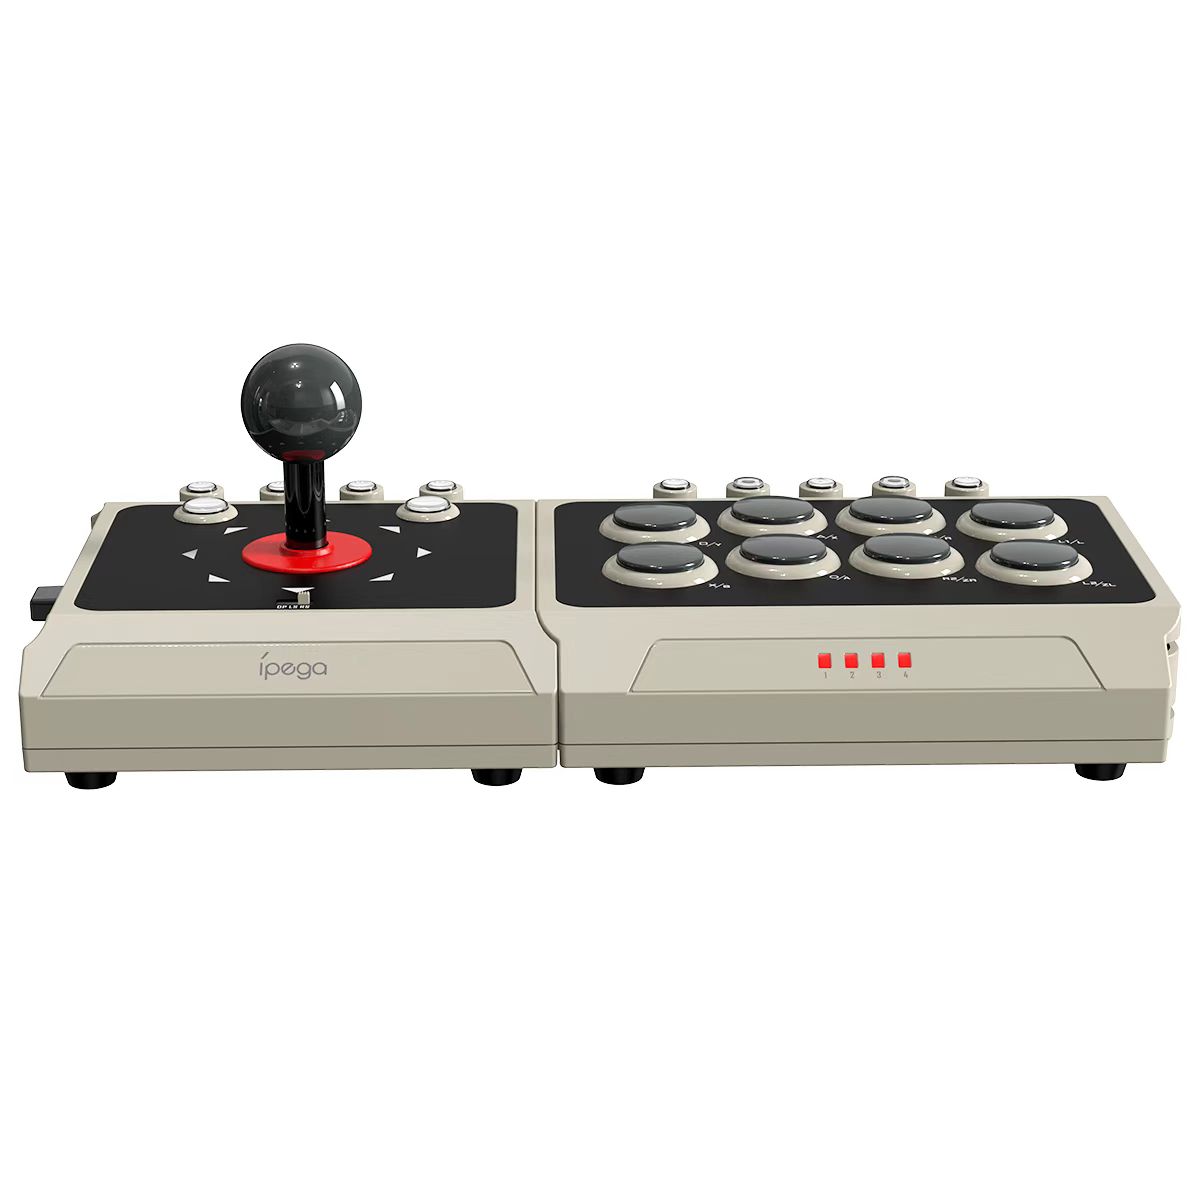 Ipega-9221 fighting game joystick